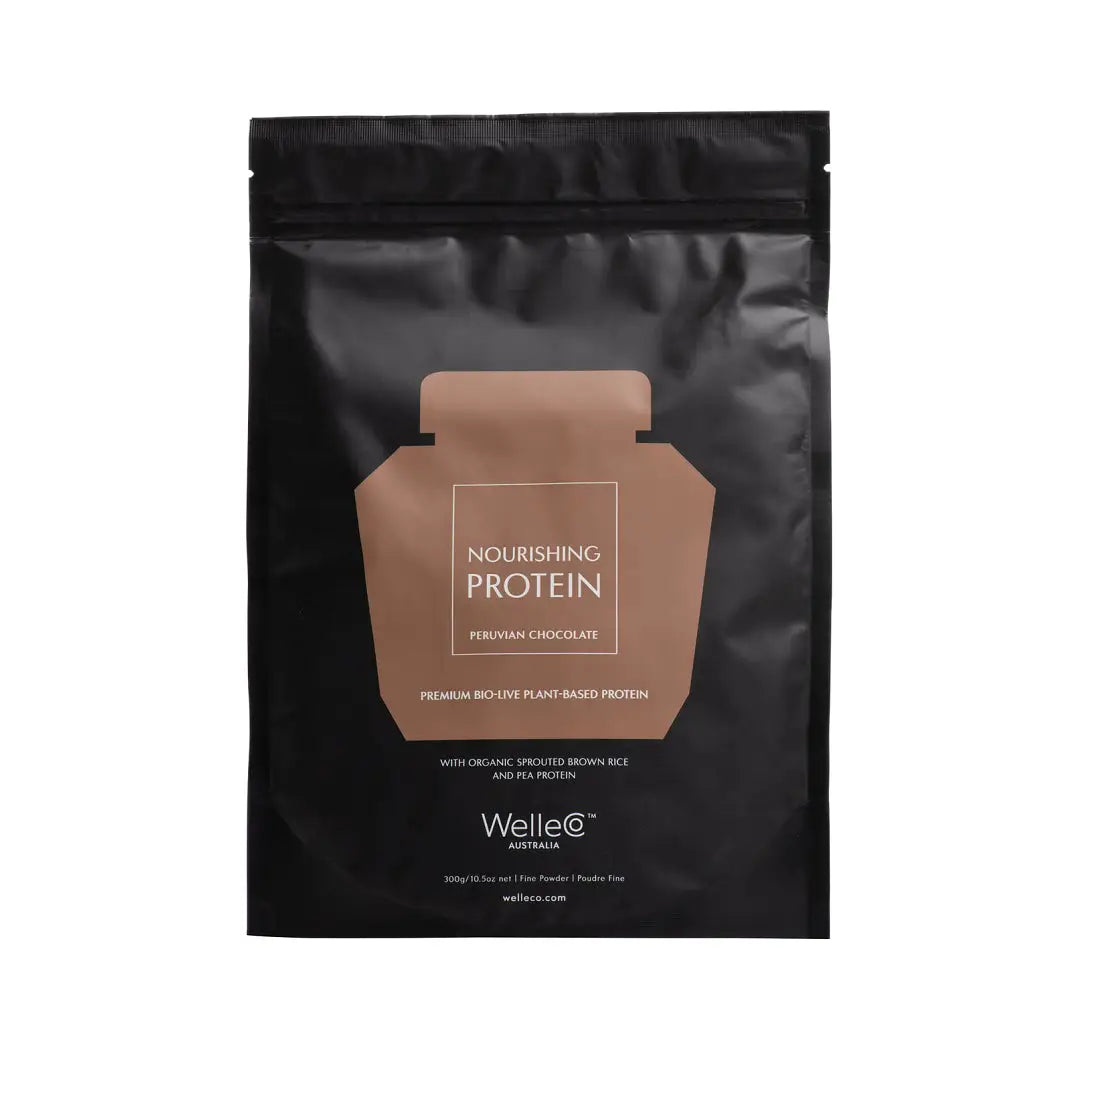 WelleCo Nourishing Protein Chocolate Refill 300g